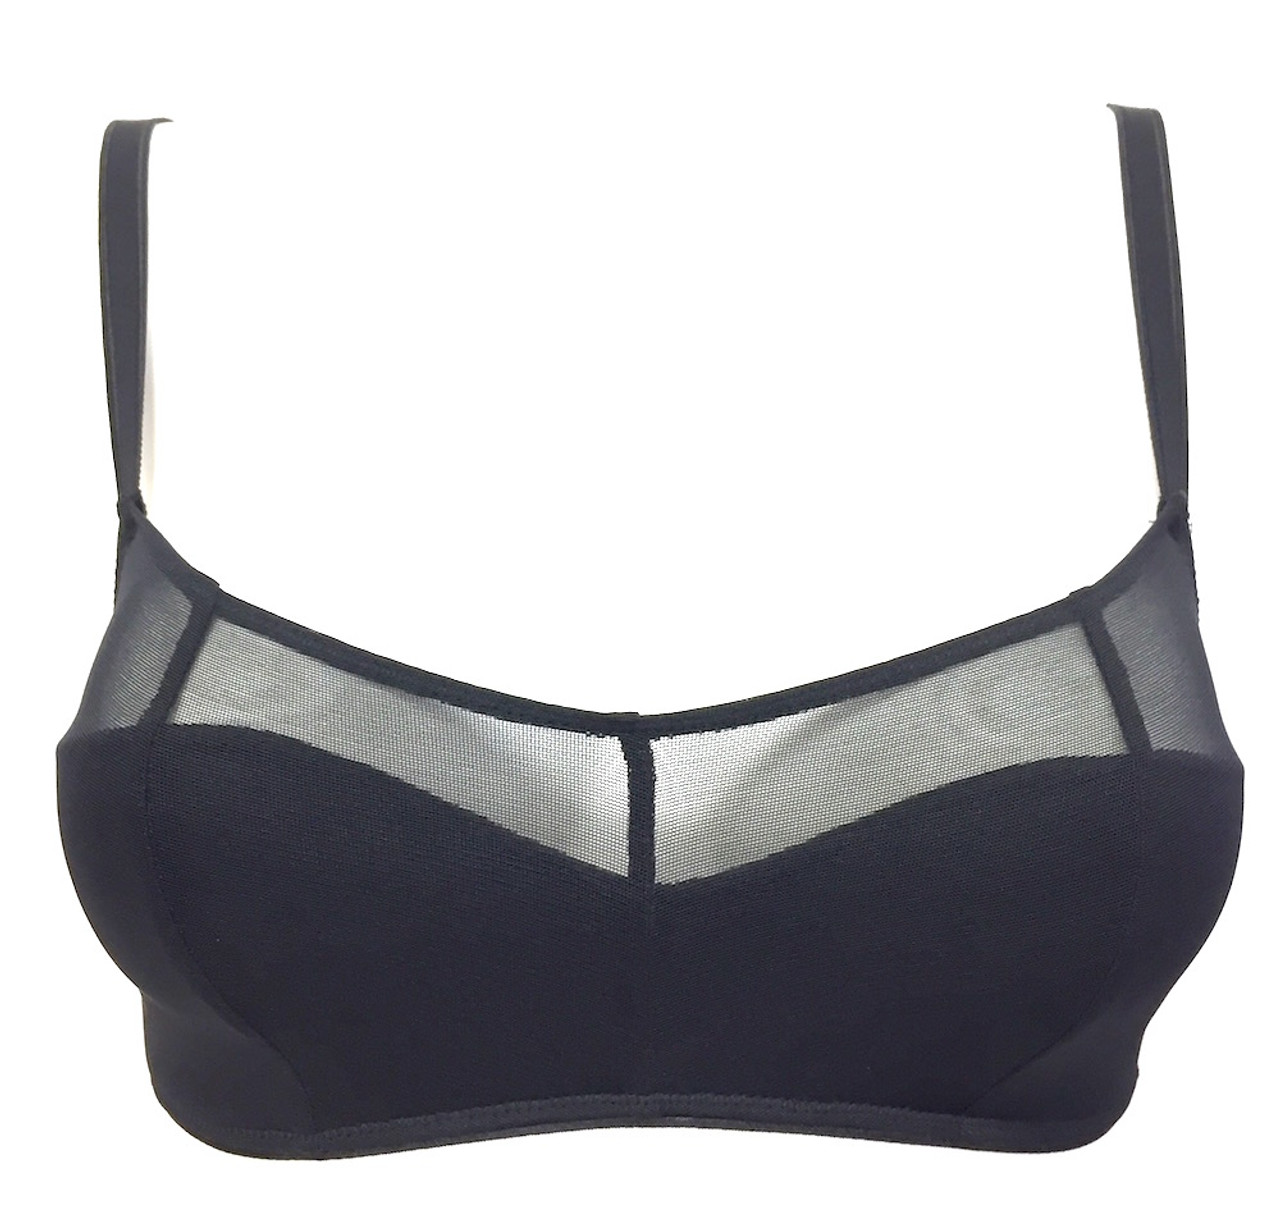 Shyle jet black lace neckline soft cami bra #bra #bras #brassiere